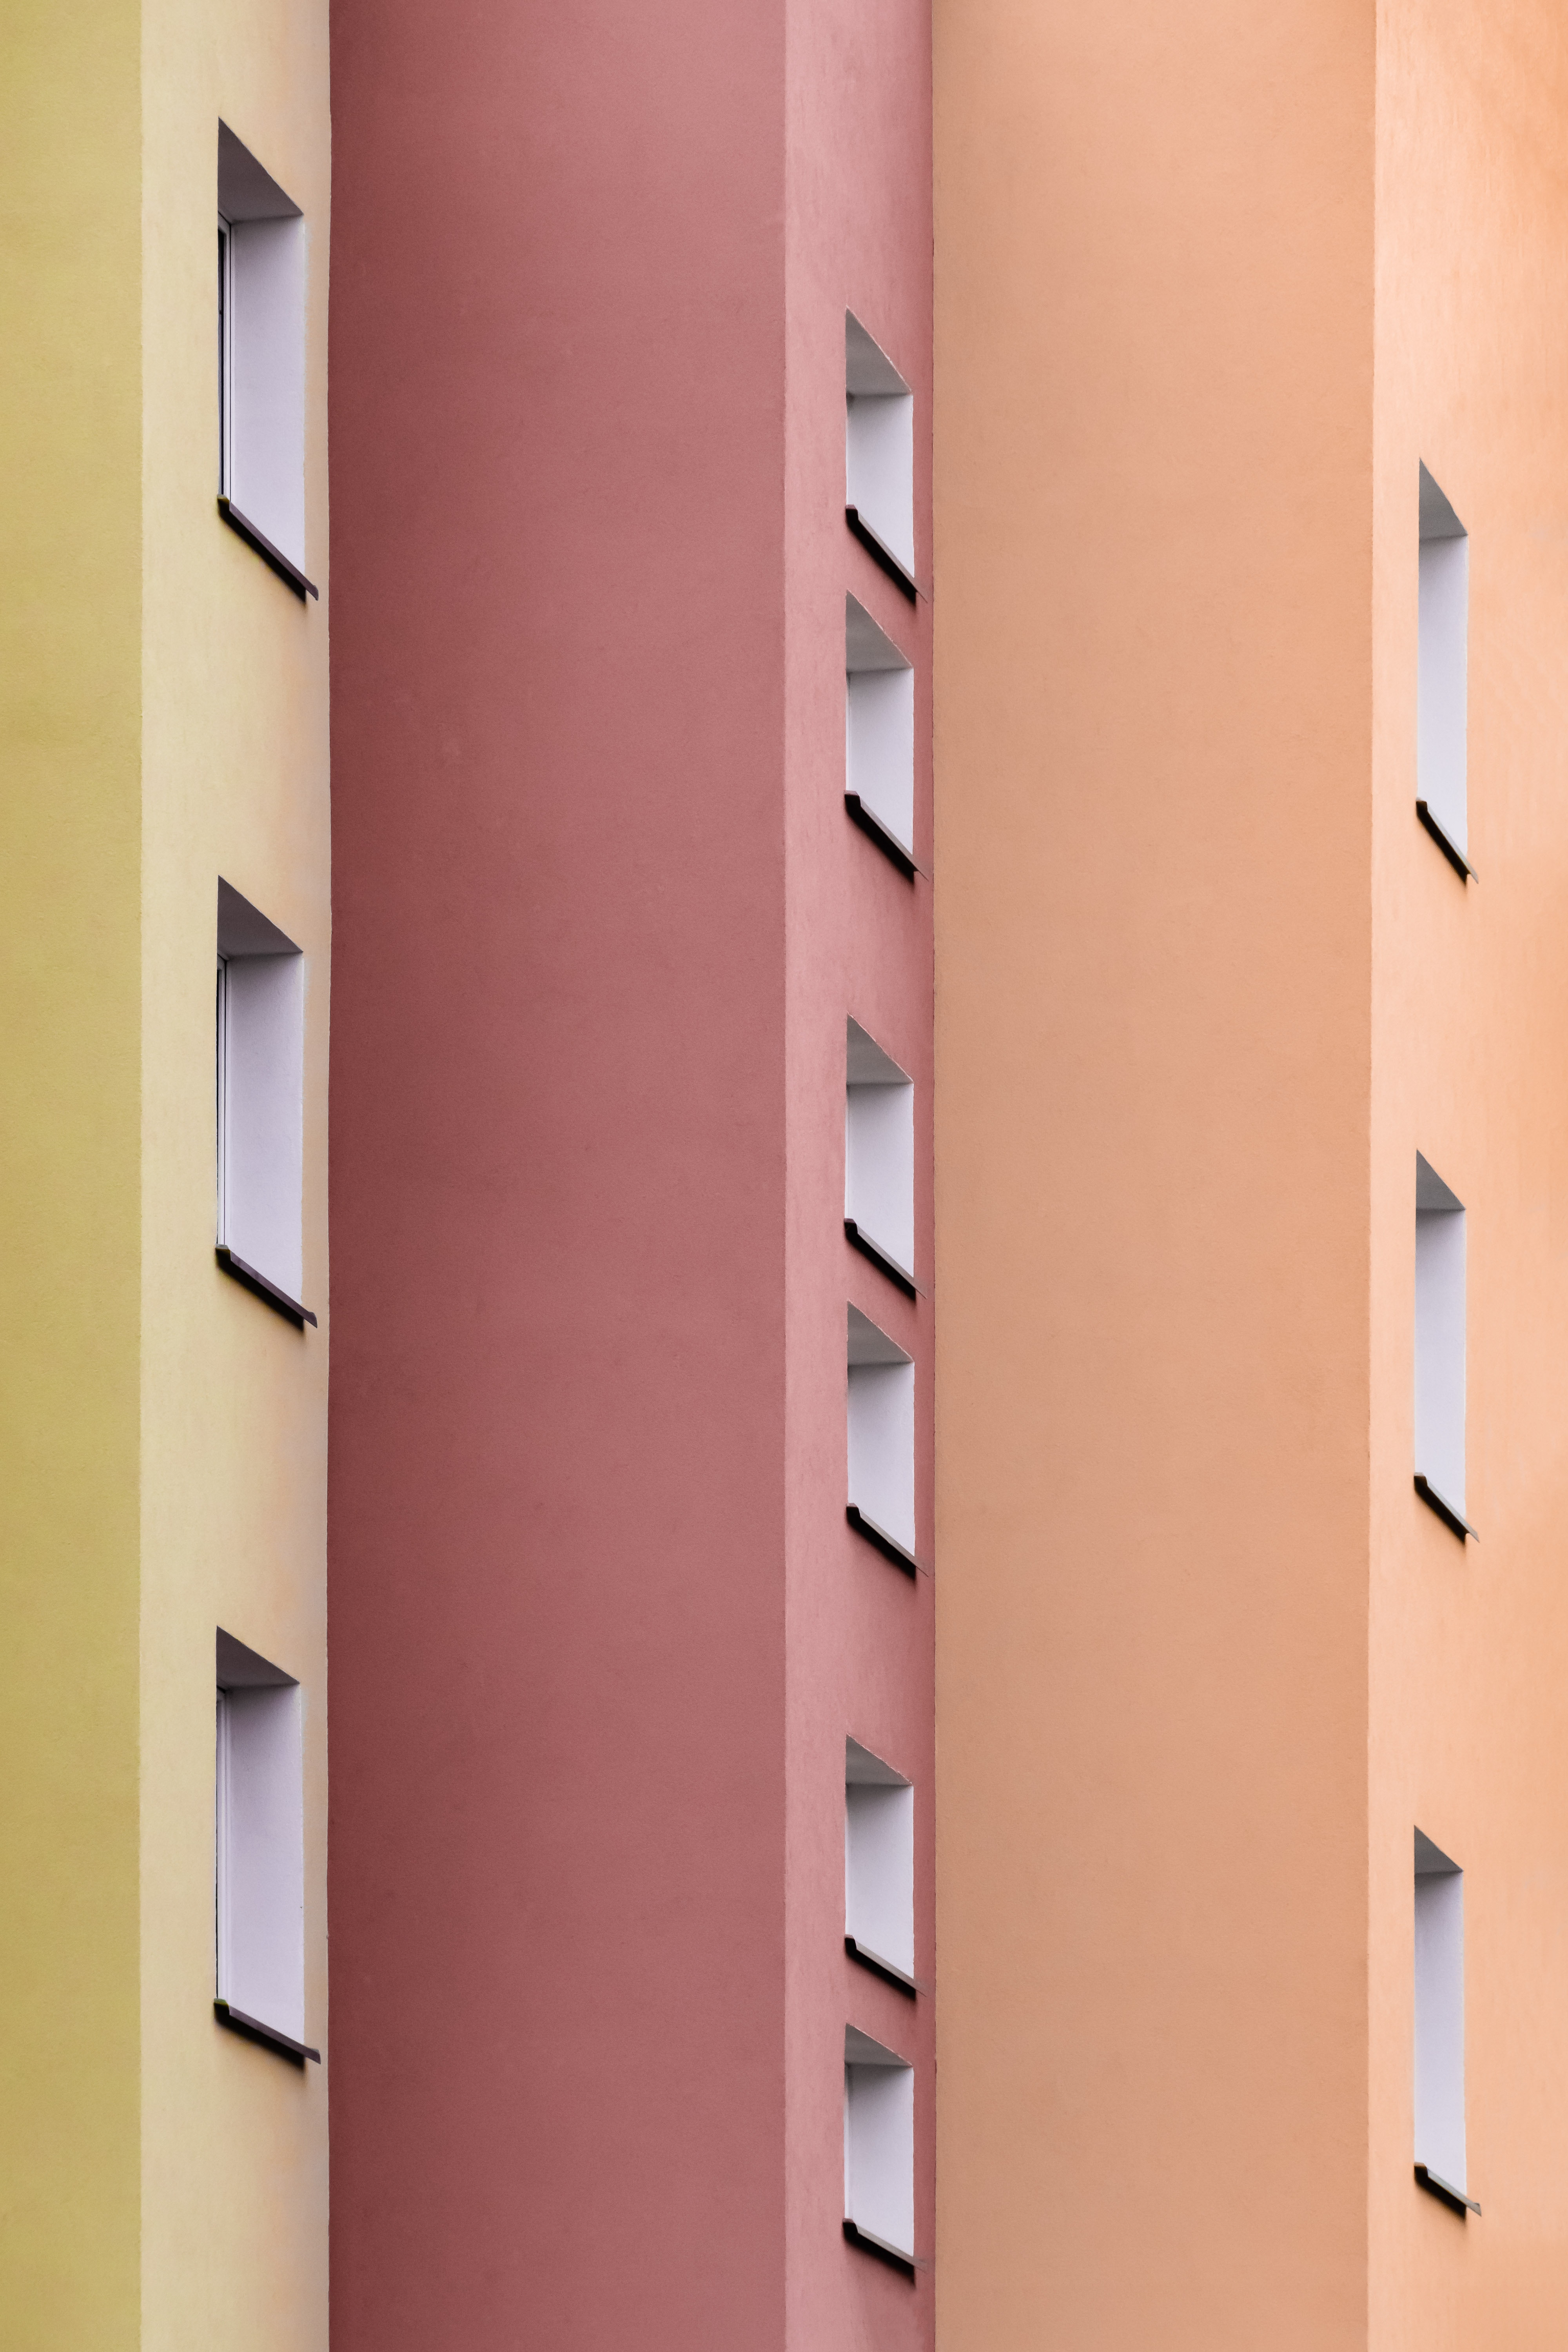 Free HD multicolored, minimalism, windows, walls, architecture, building, motley, symmetry